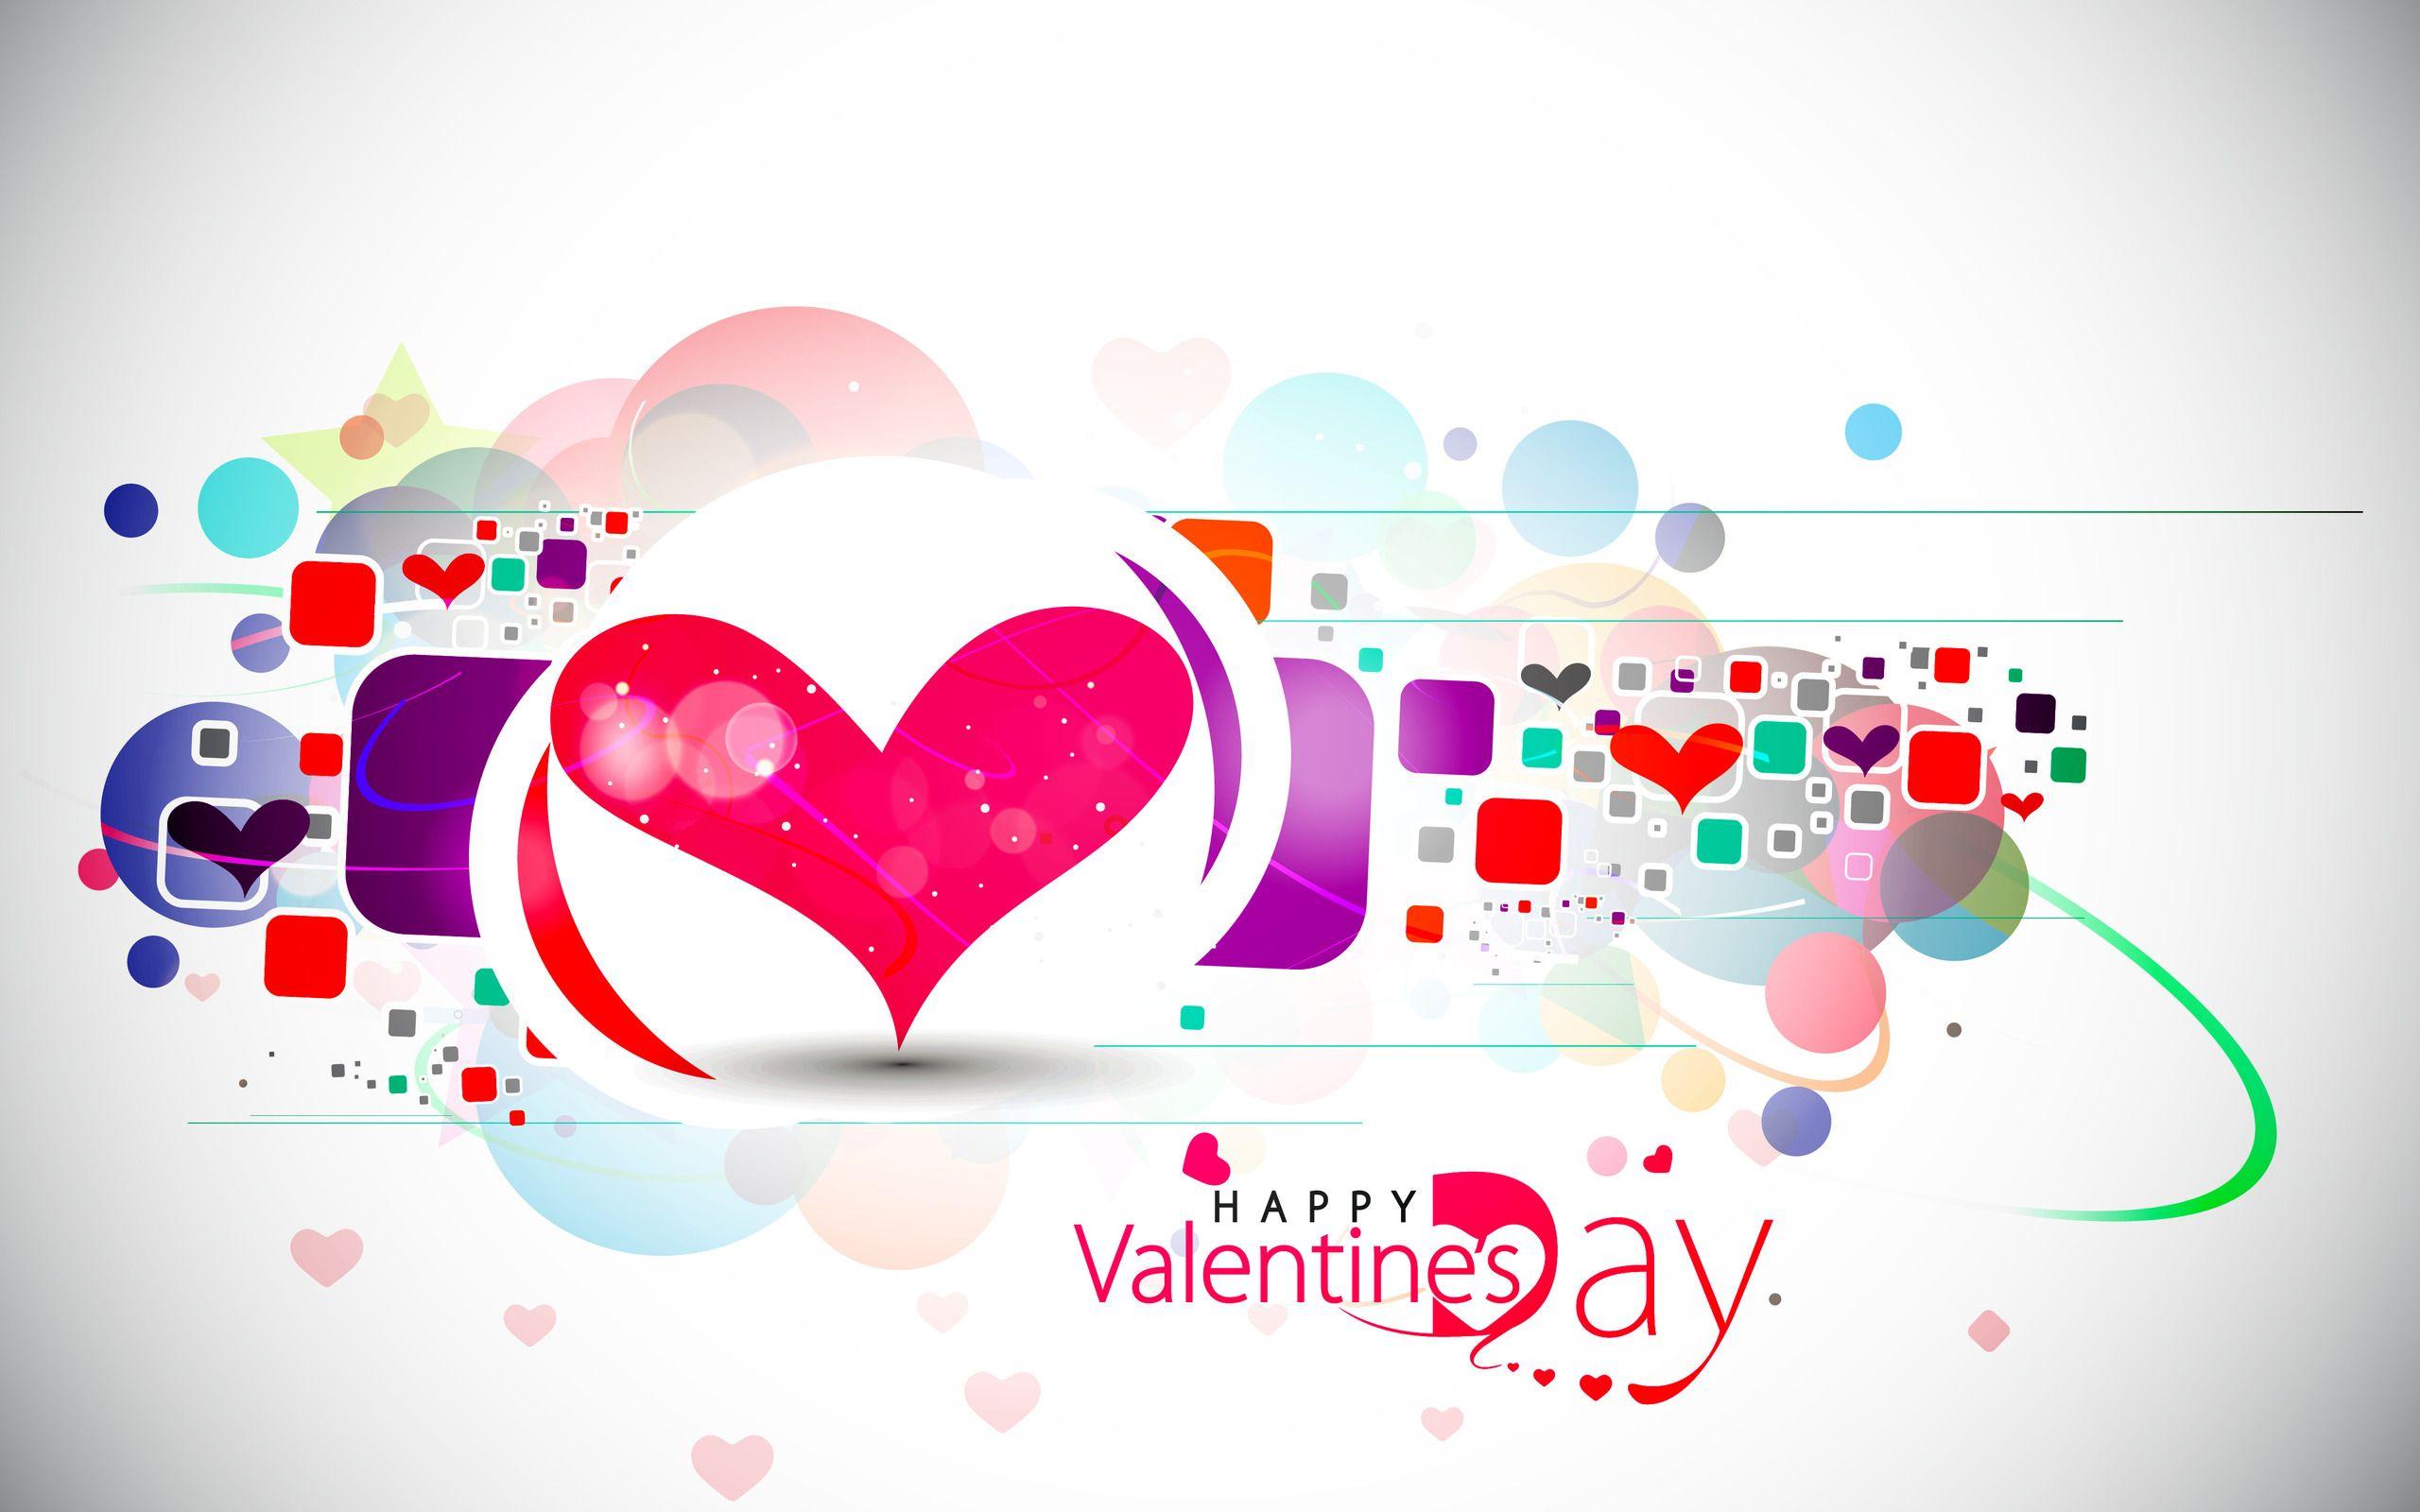 Valentine Day Wallpaper HD. Happy valentines day picture